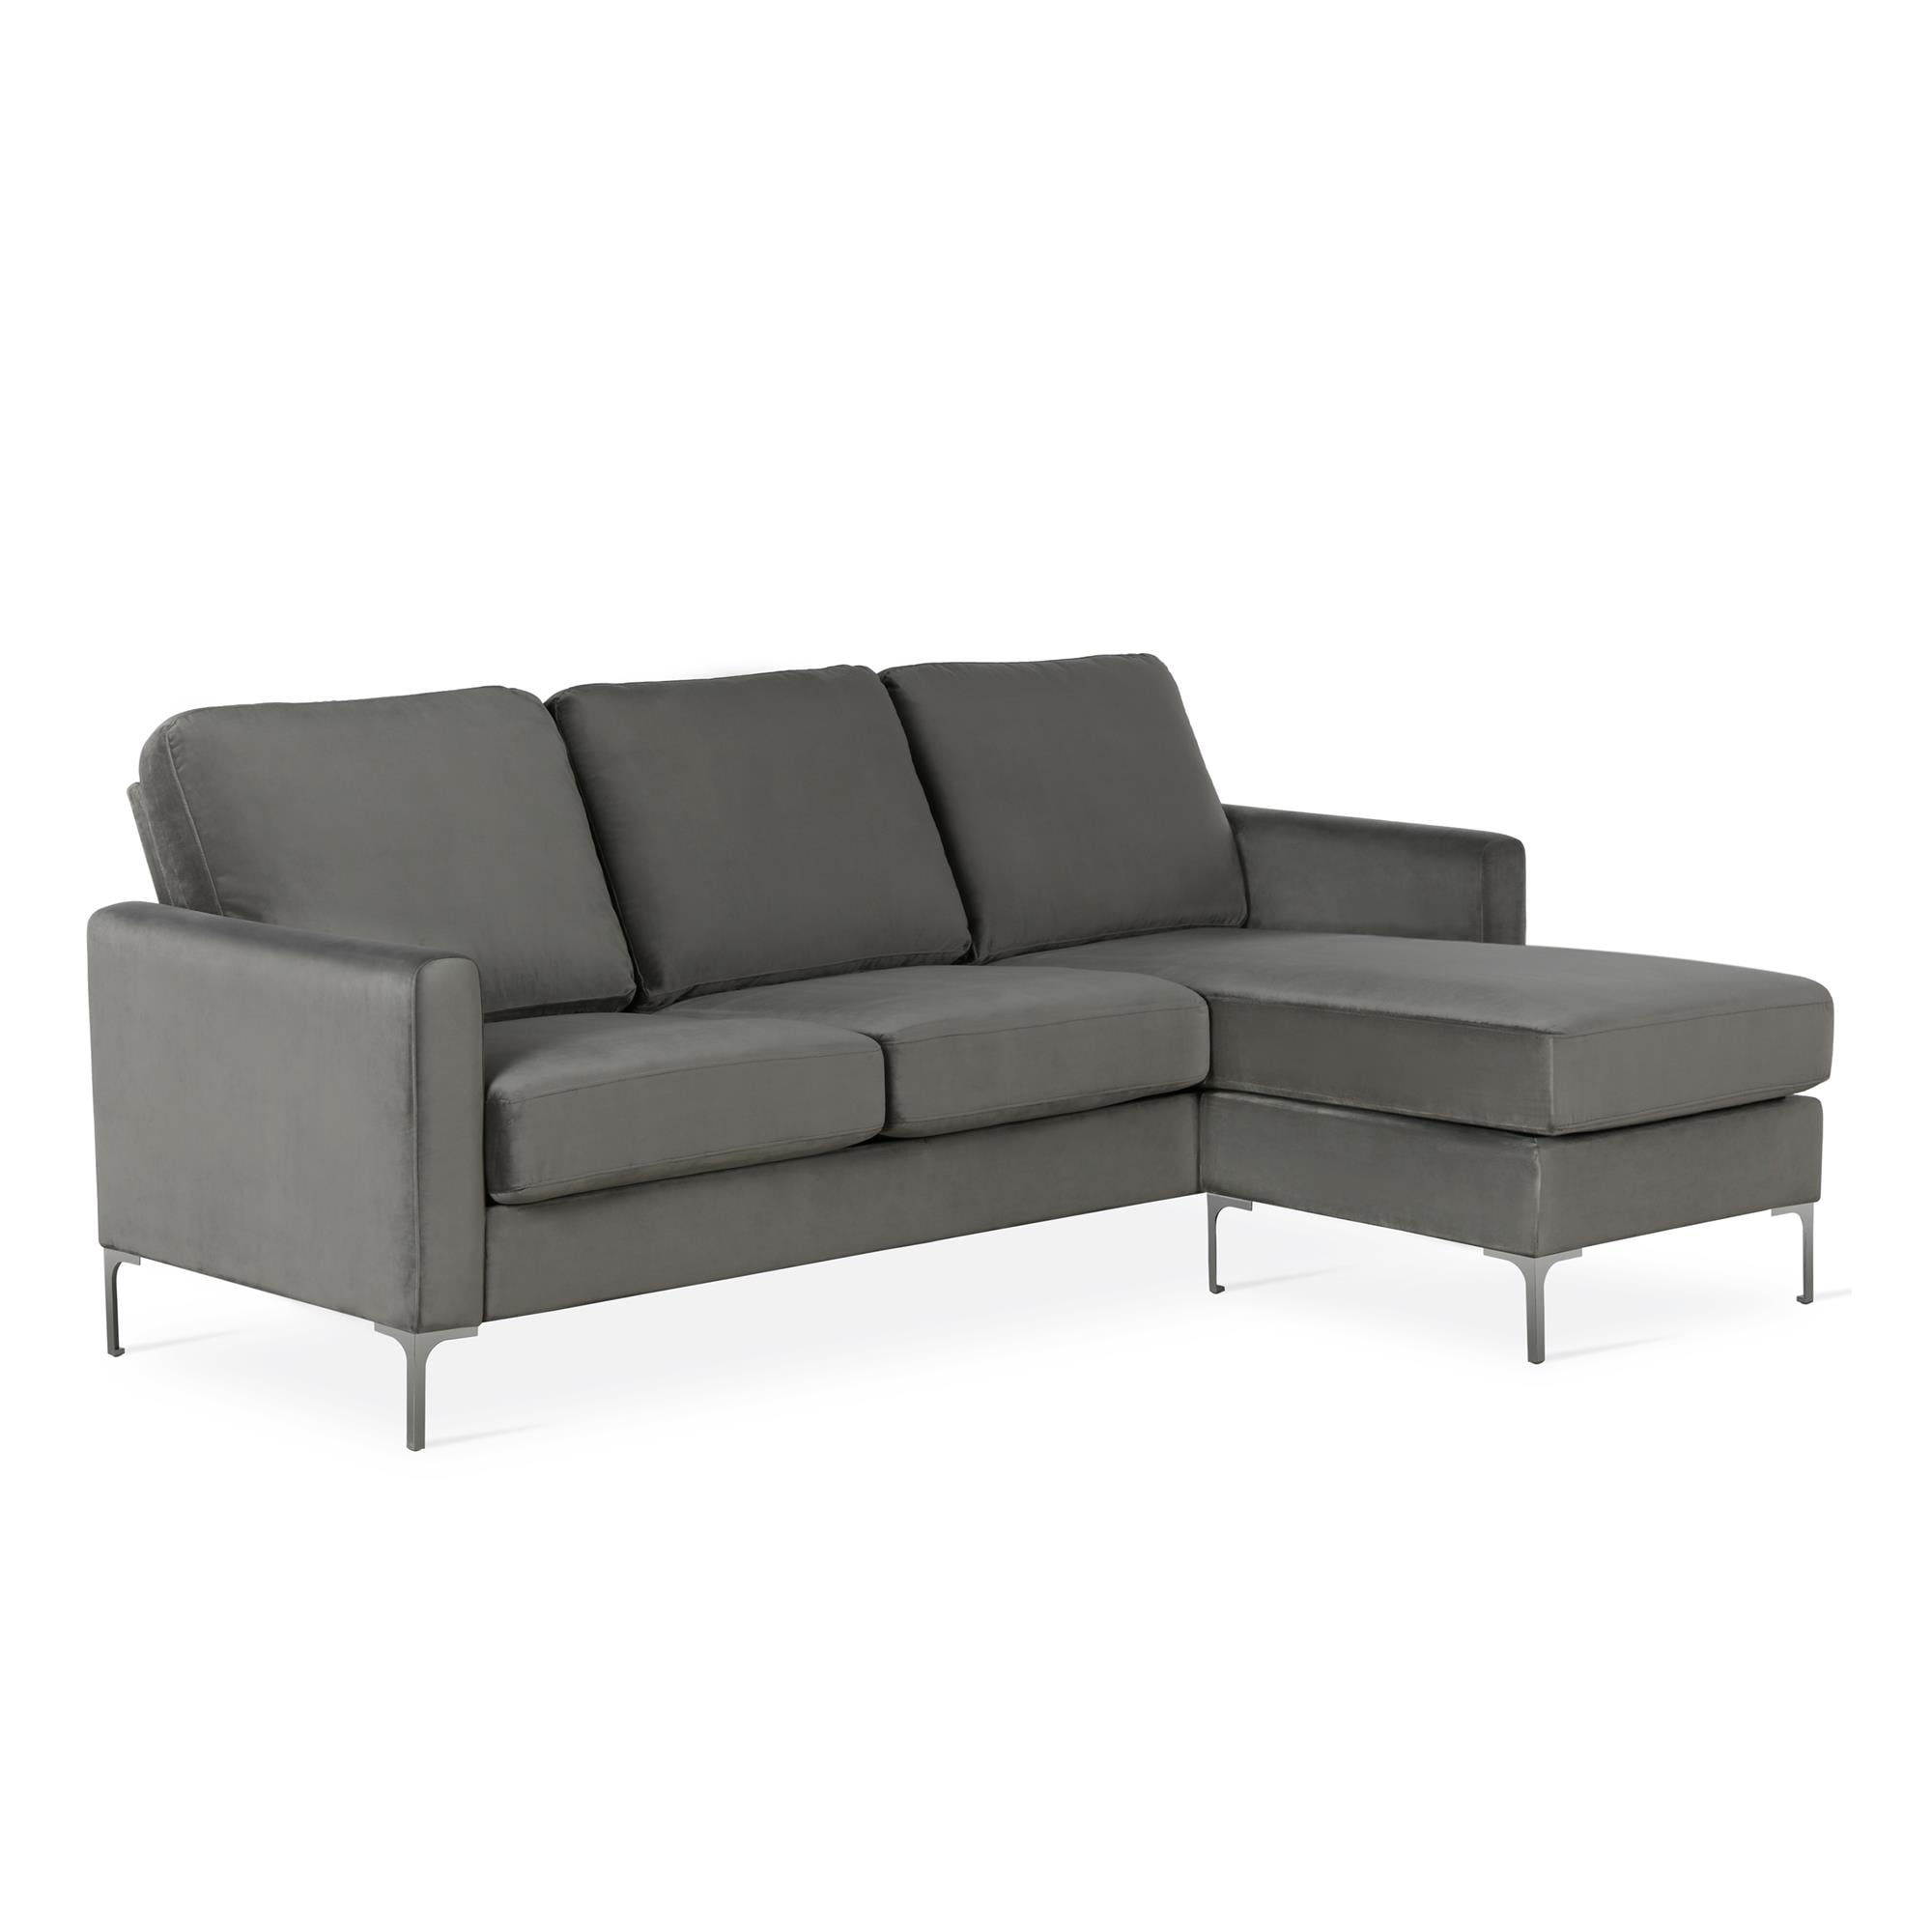 Novogratz Chapman Sectional Sofa with Chrome Legs, Gray